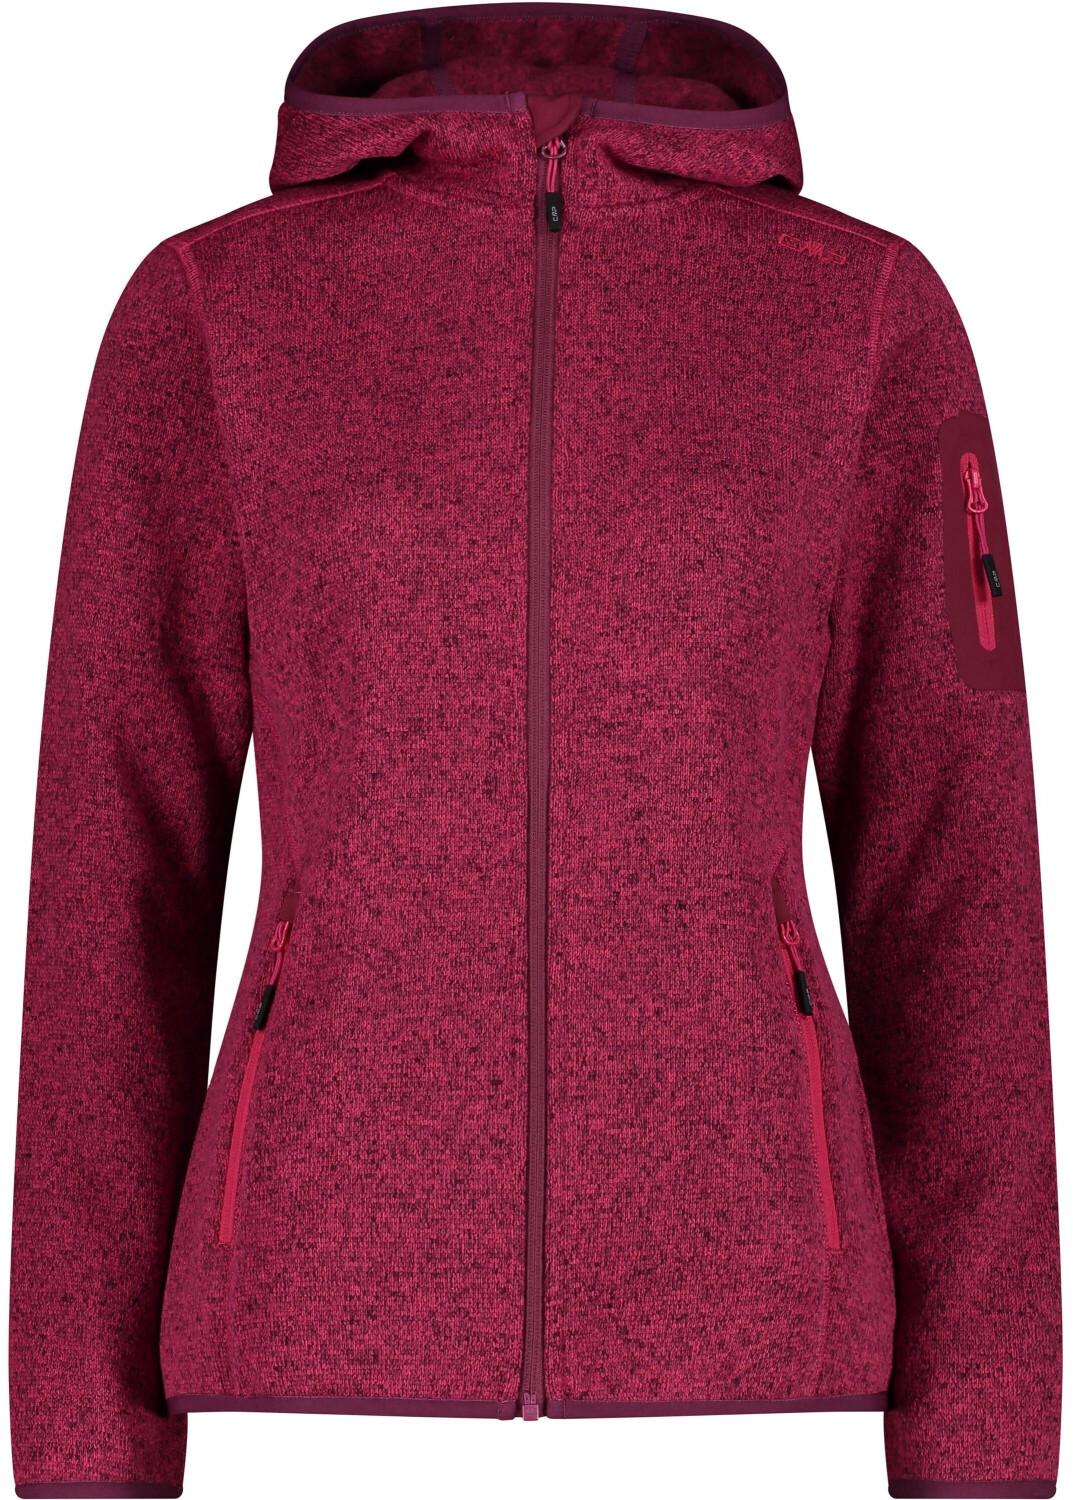 30,74 Woman Hood fucsia/amaranto ab (3H19826) € Fleece Fix CMP Jacket bei Preisvergleich |